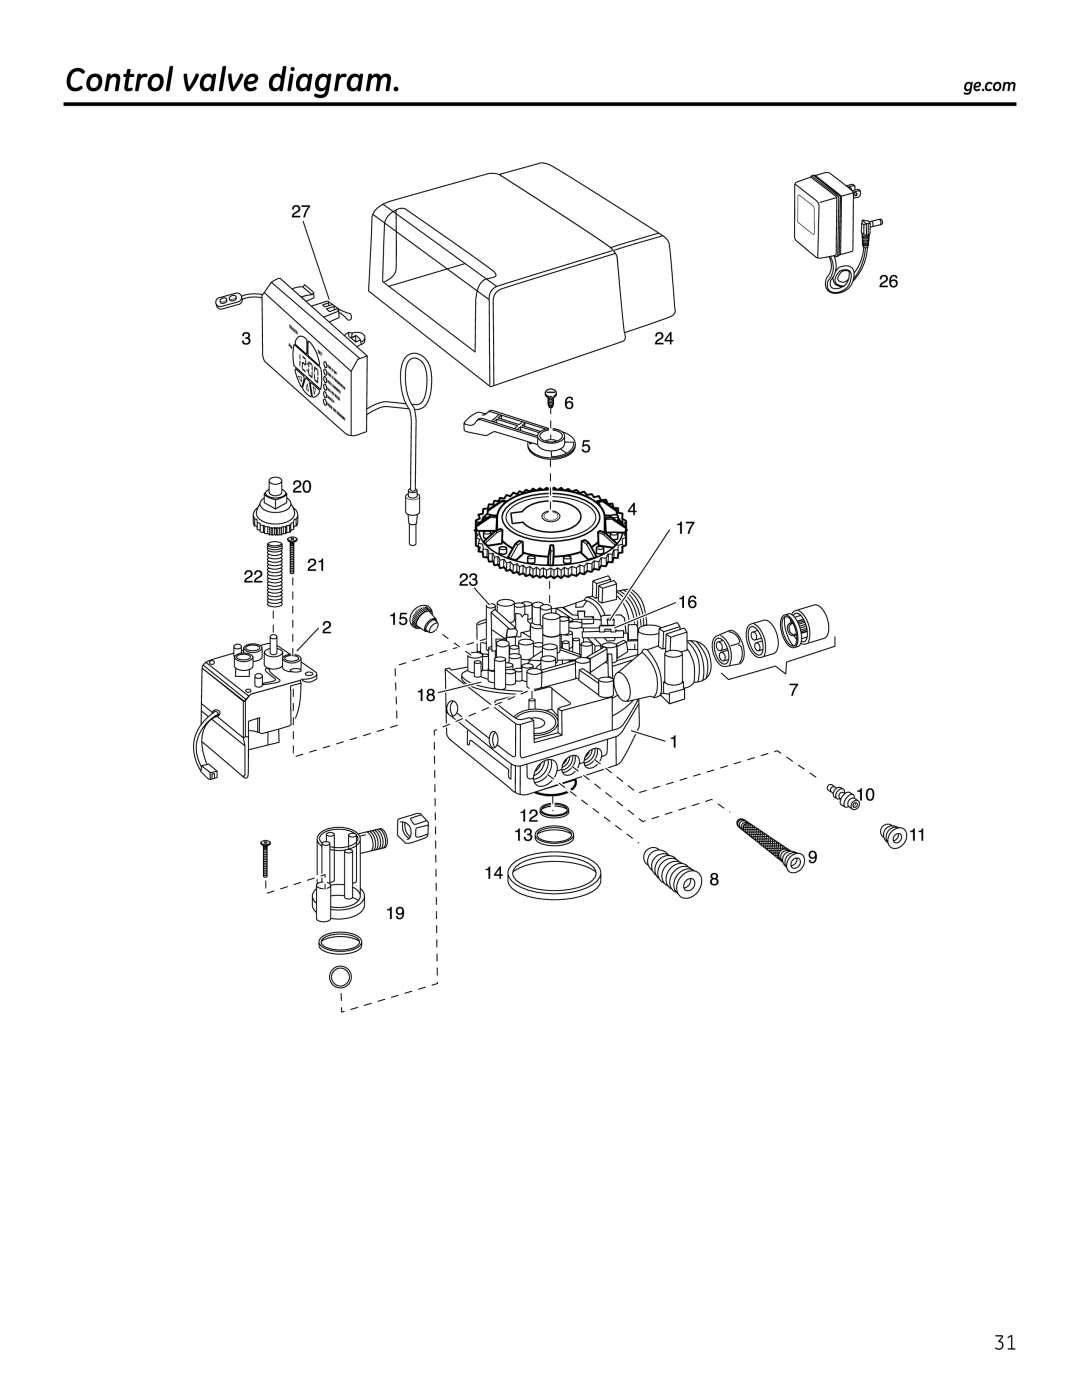 GE GNPR40L, GNPR48L installation instructions Control valve diagram, ge.com 